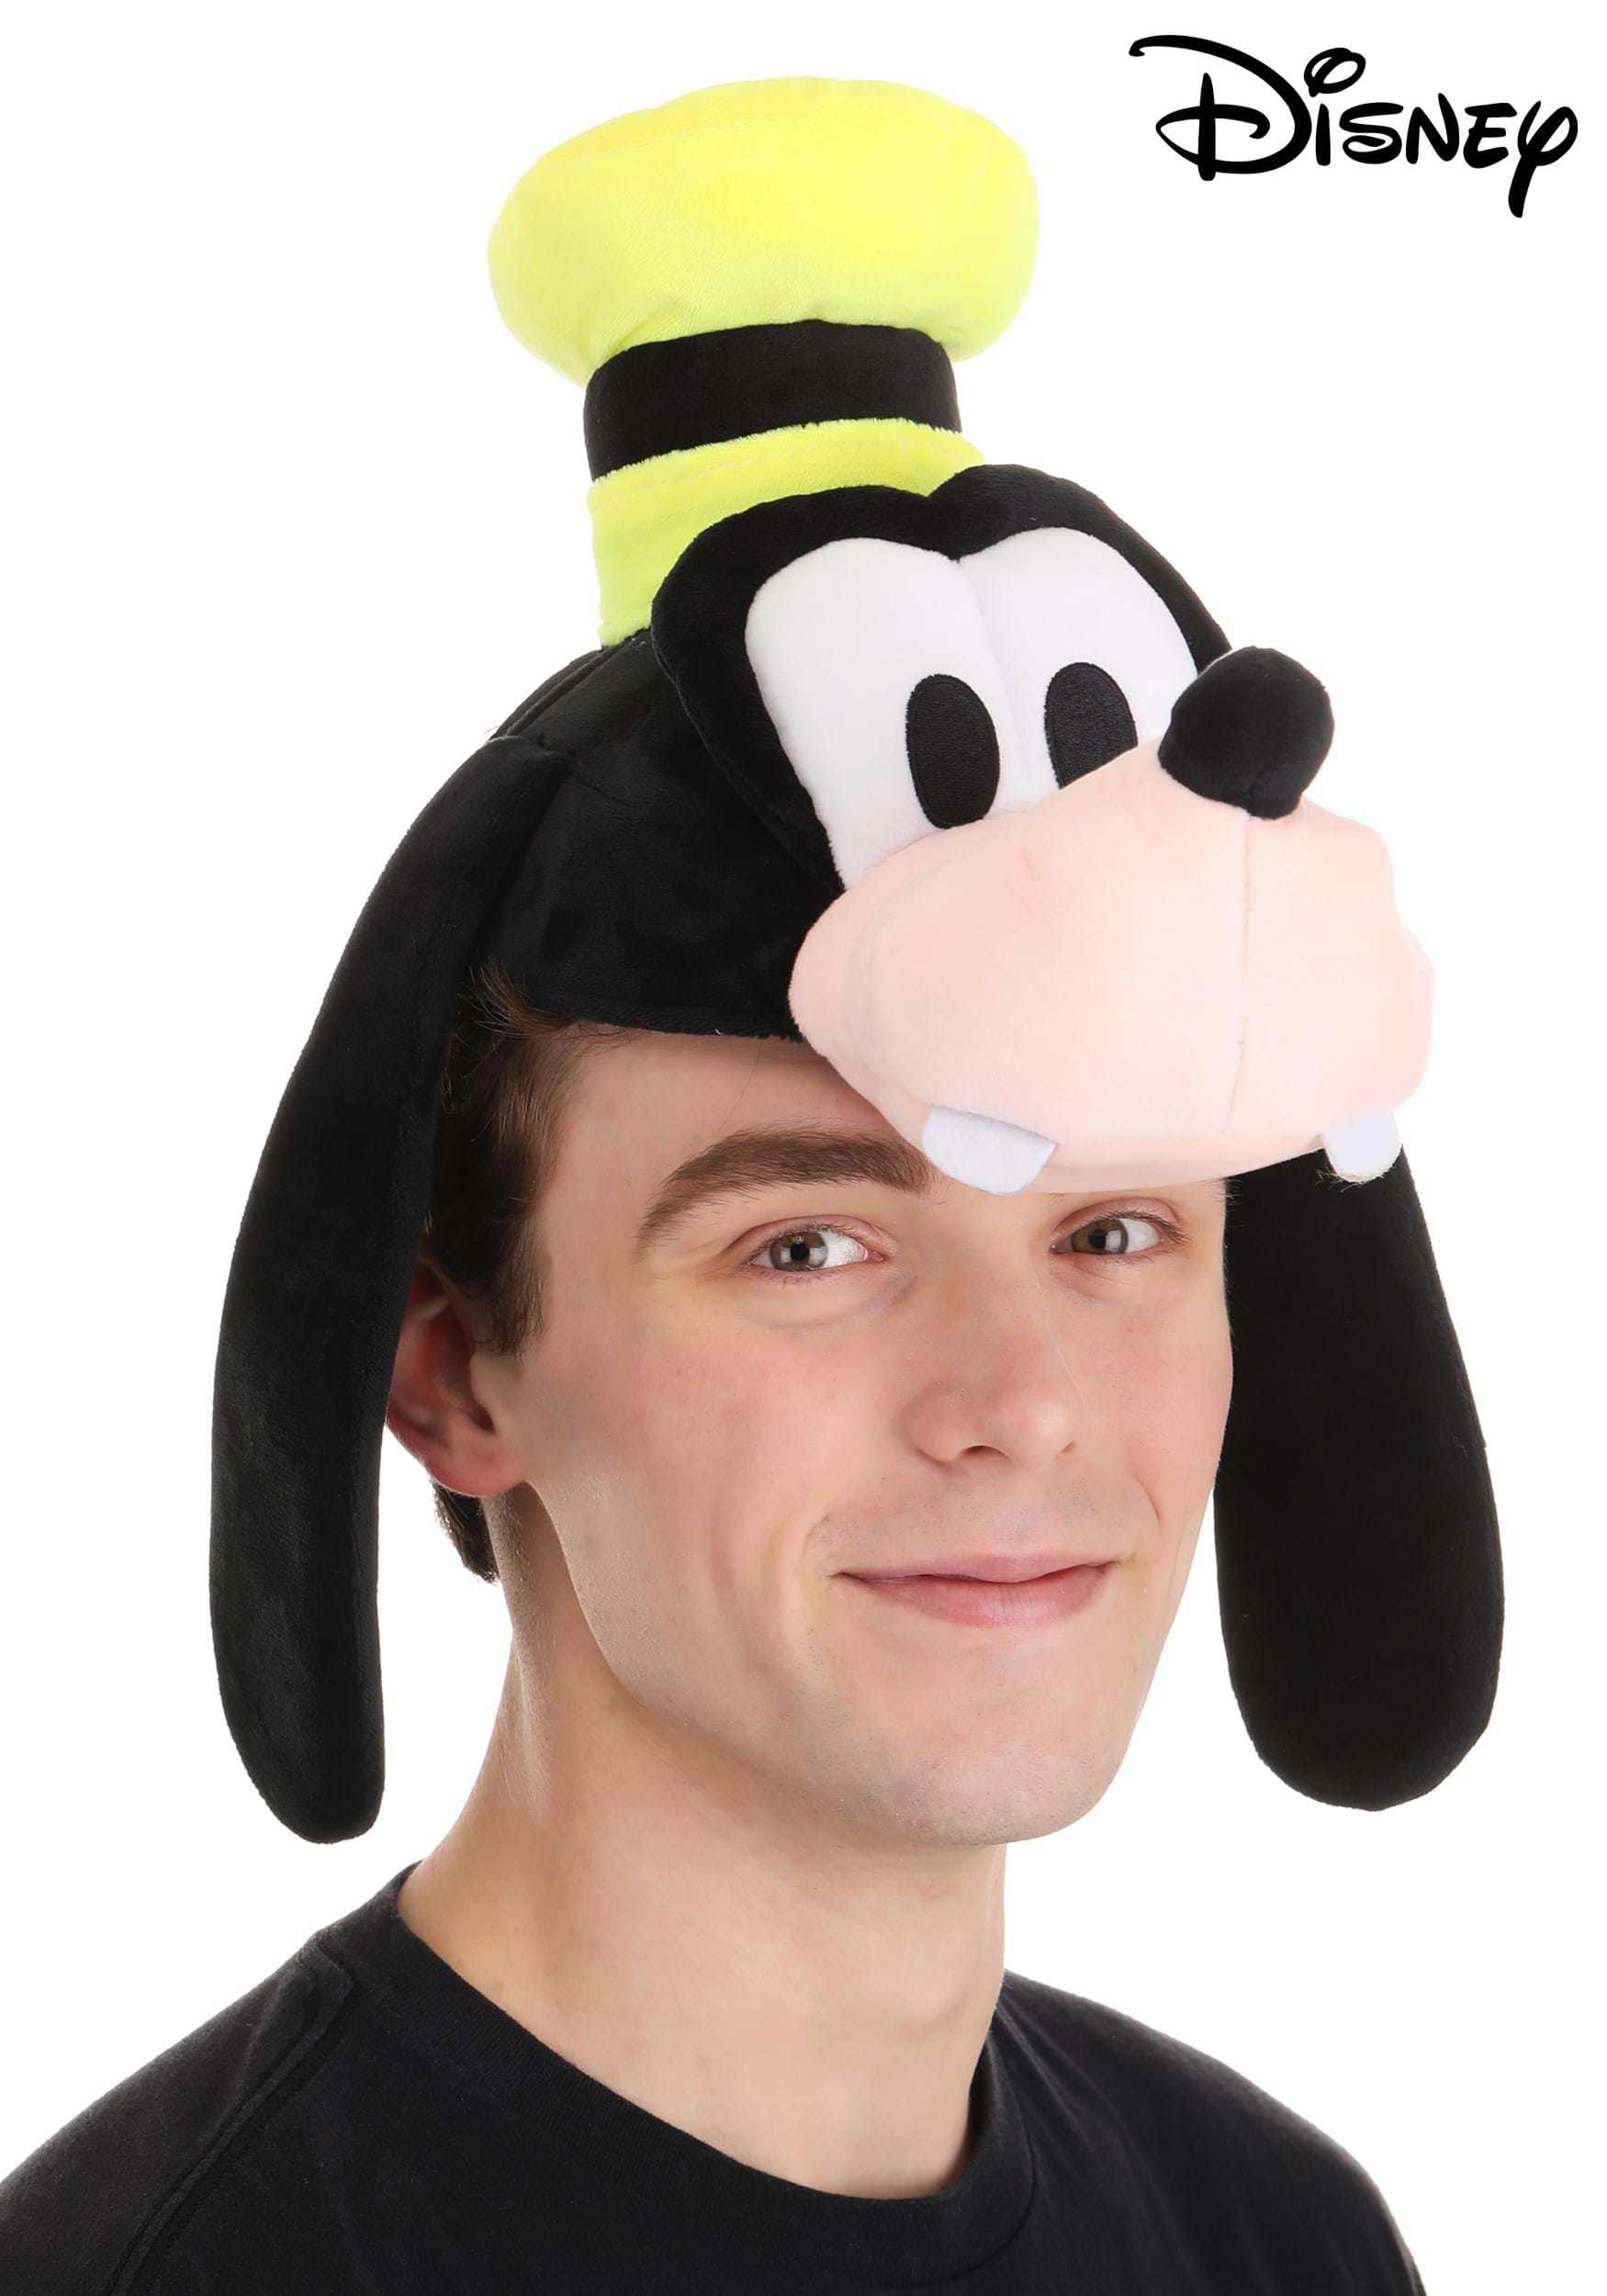 Disney Minnie Mouse Plush Costume Headband